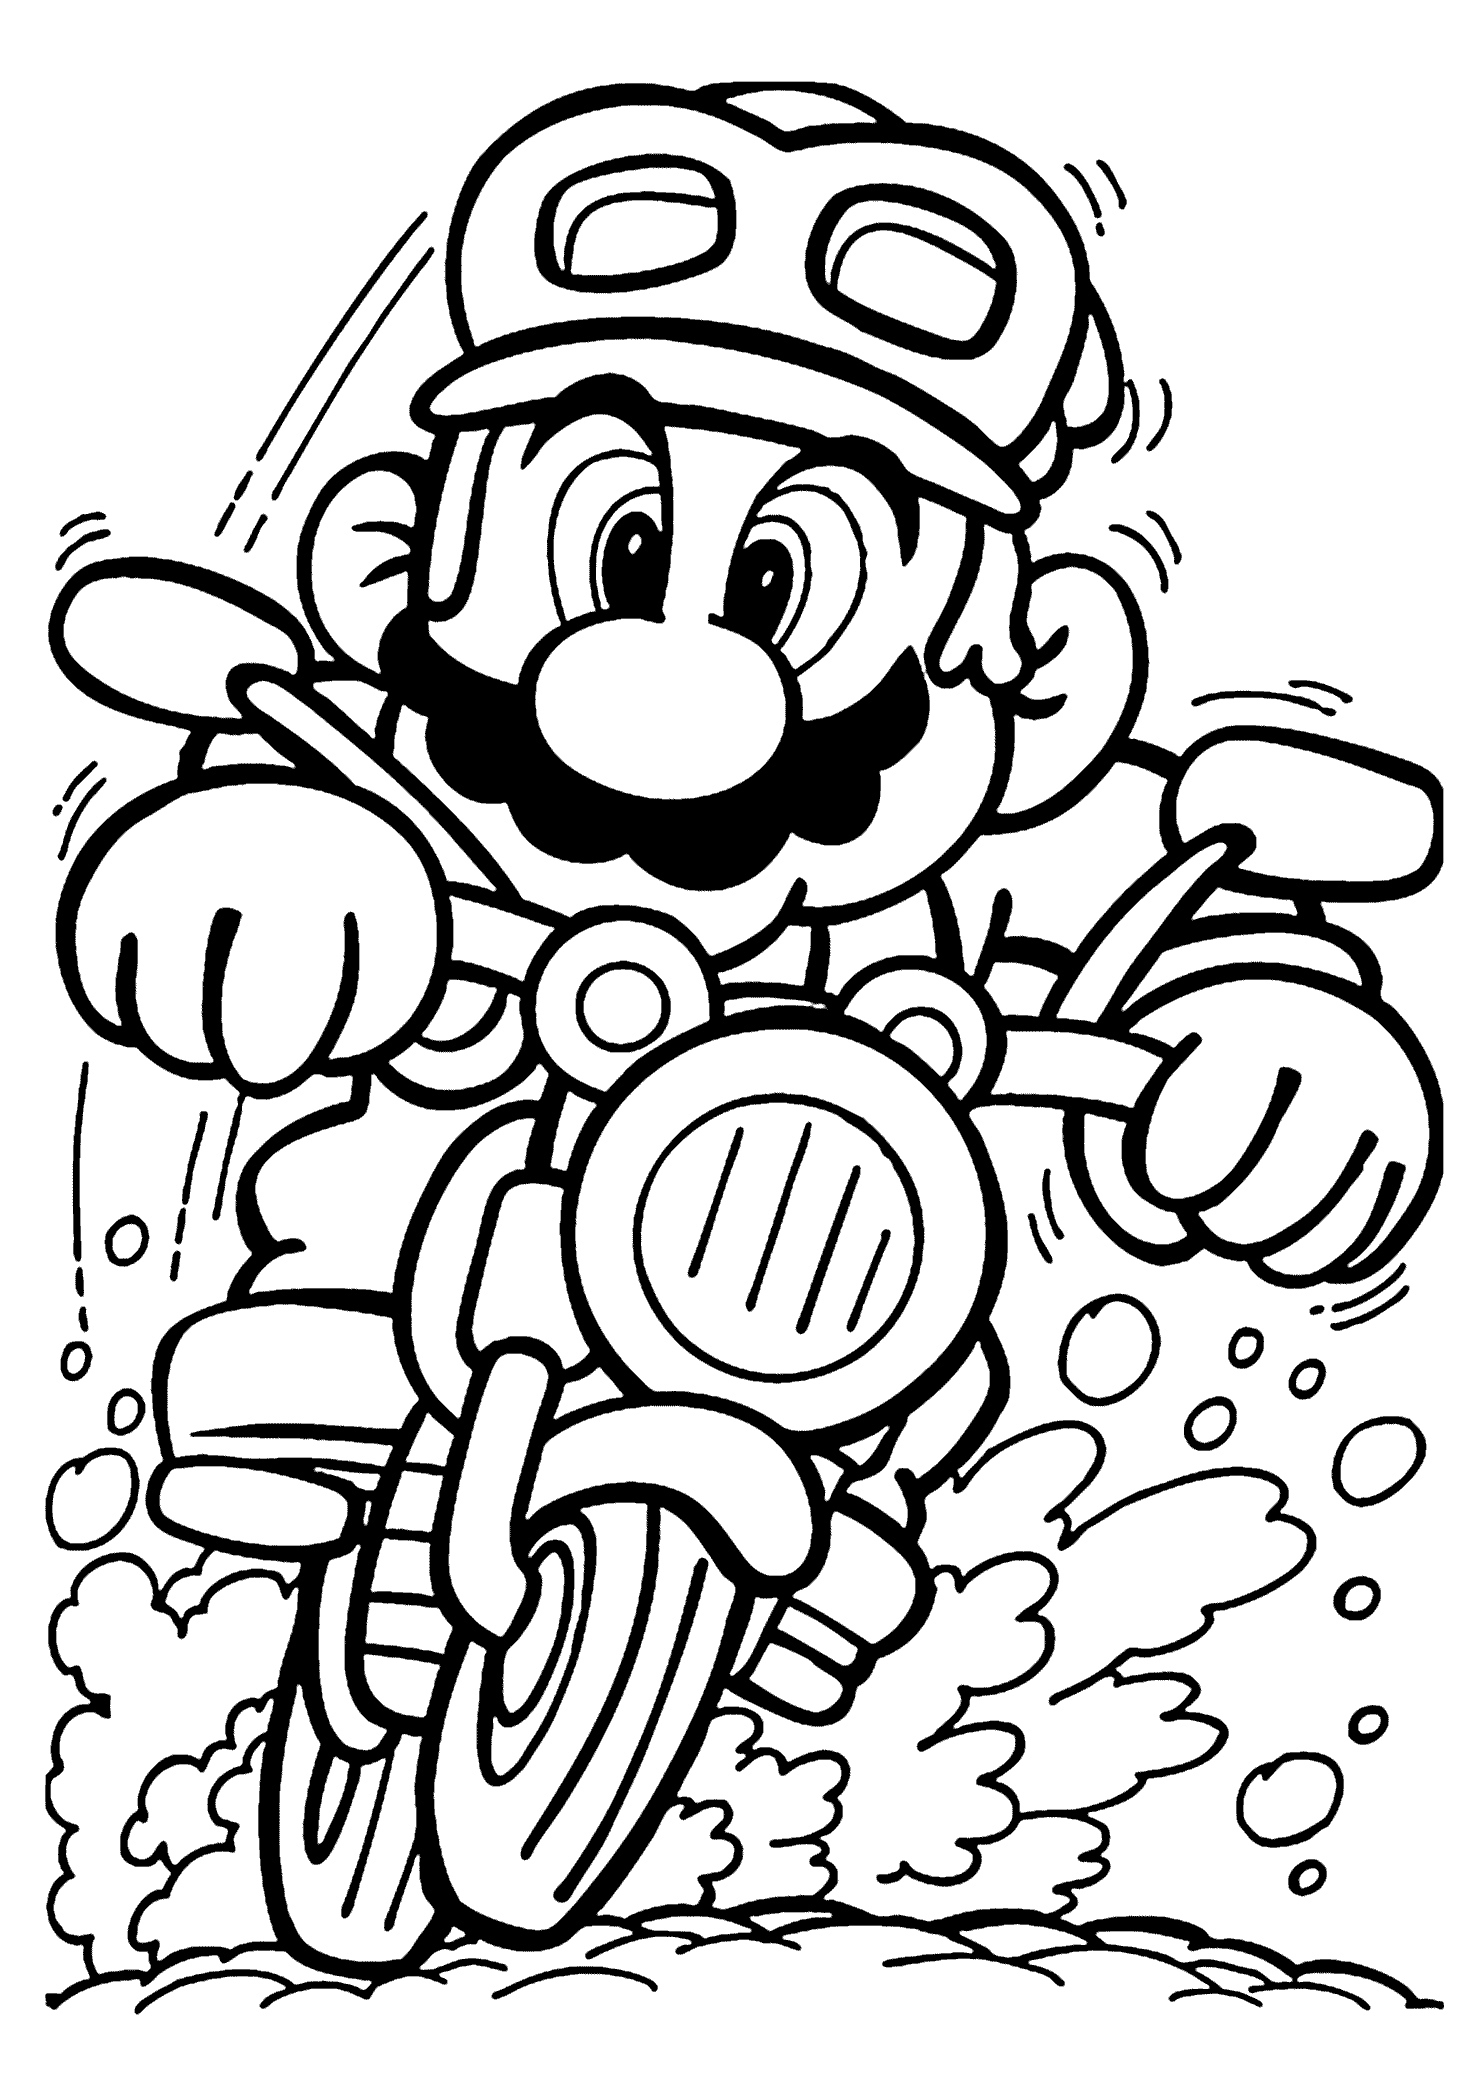 Mario Kart 8 Drawings Free download on ClipArtMag